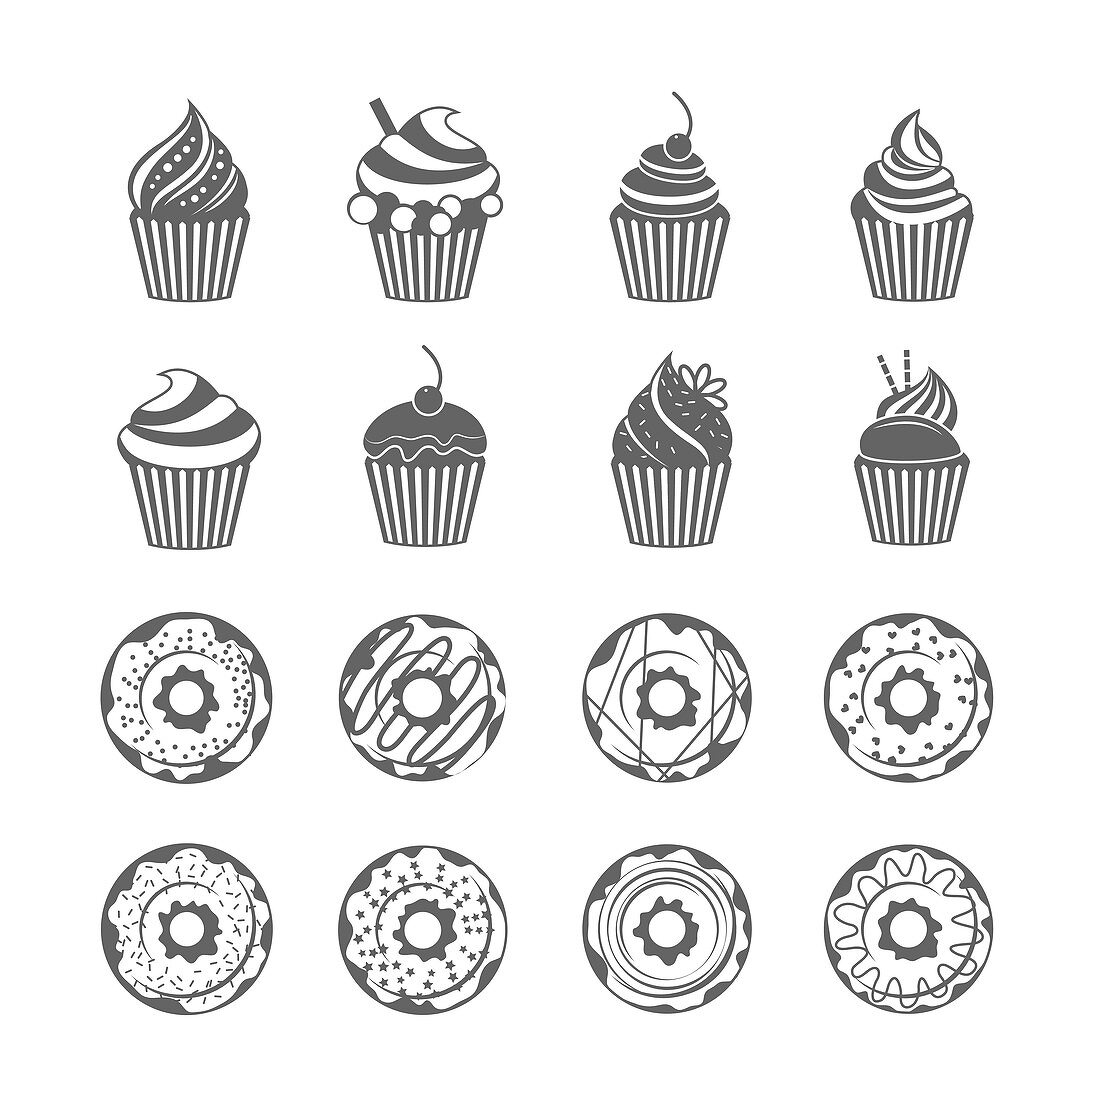 Desserts, illustration